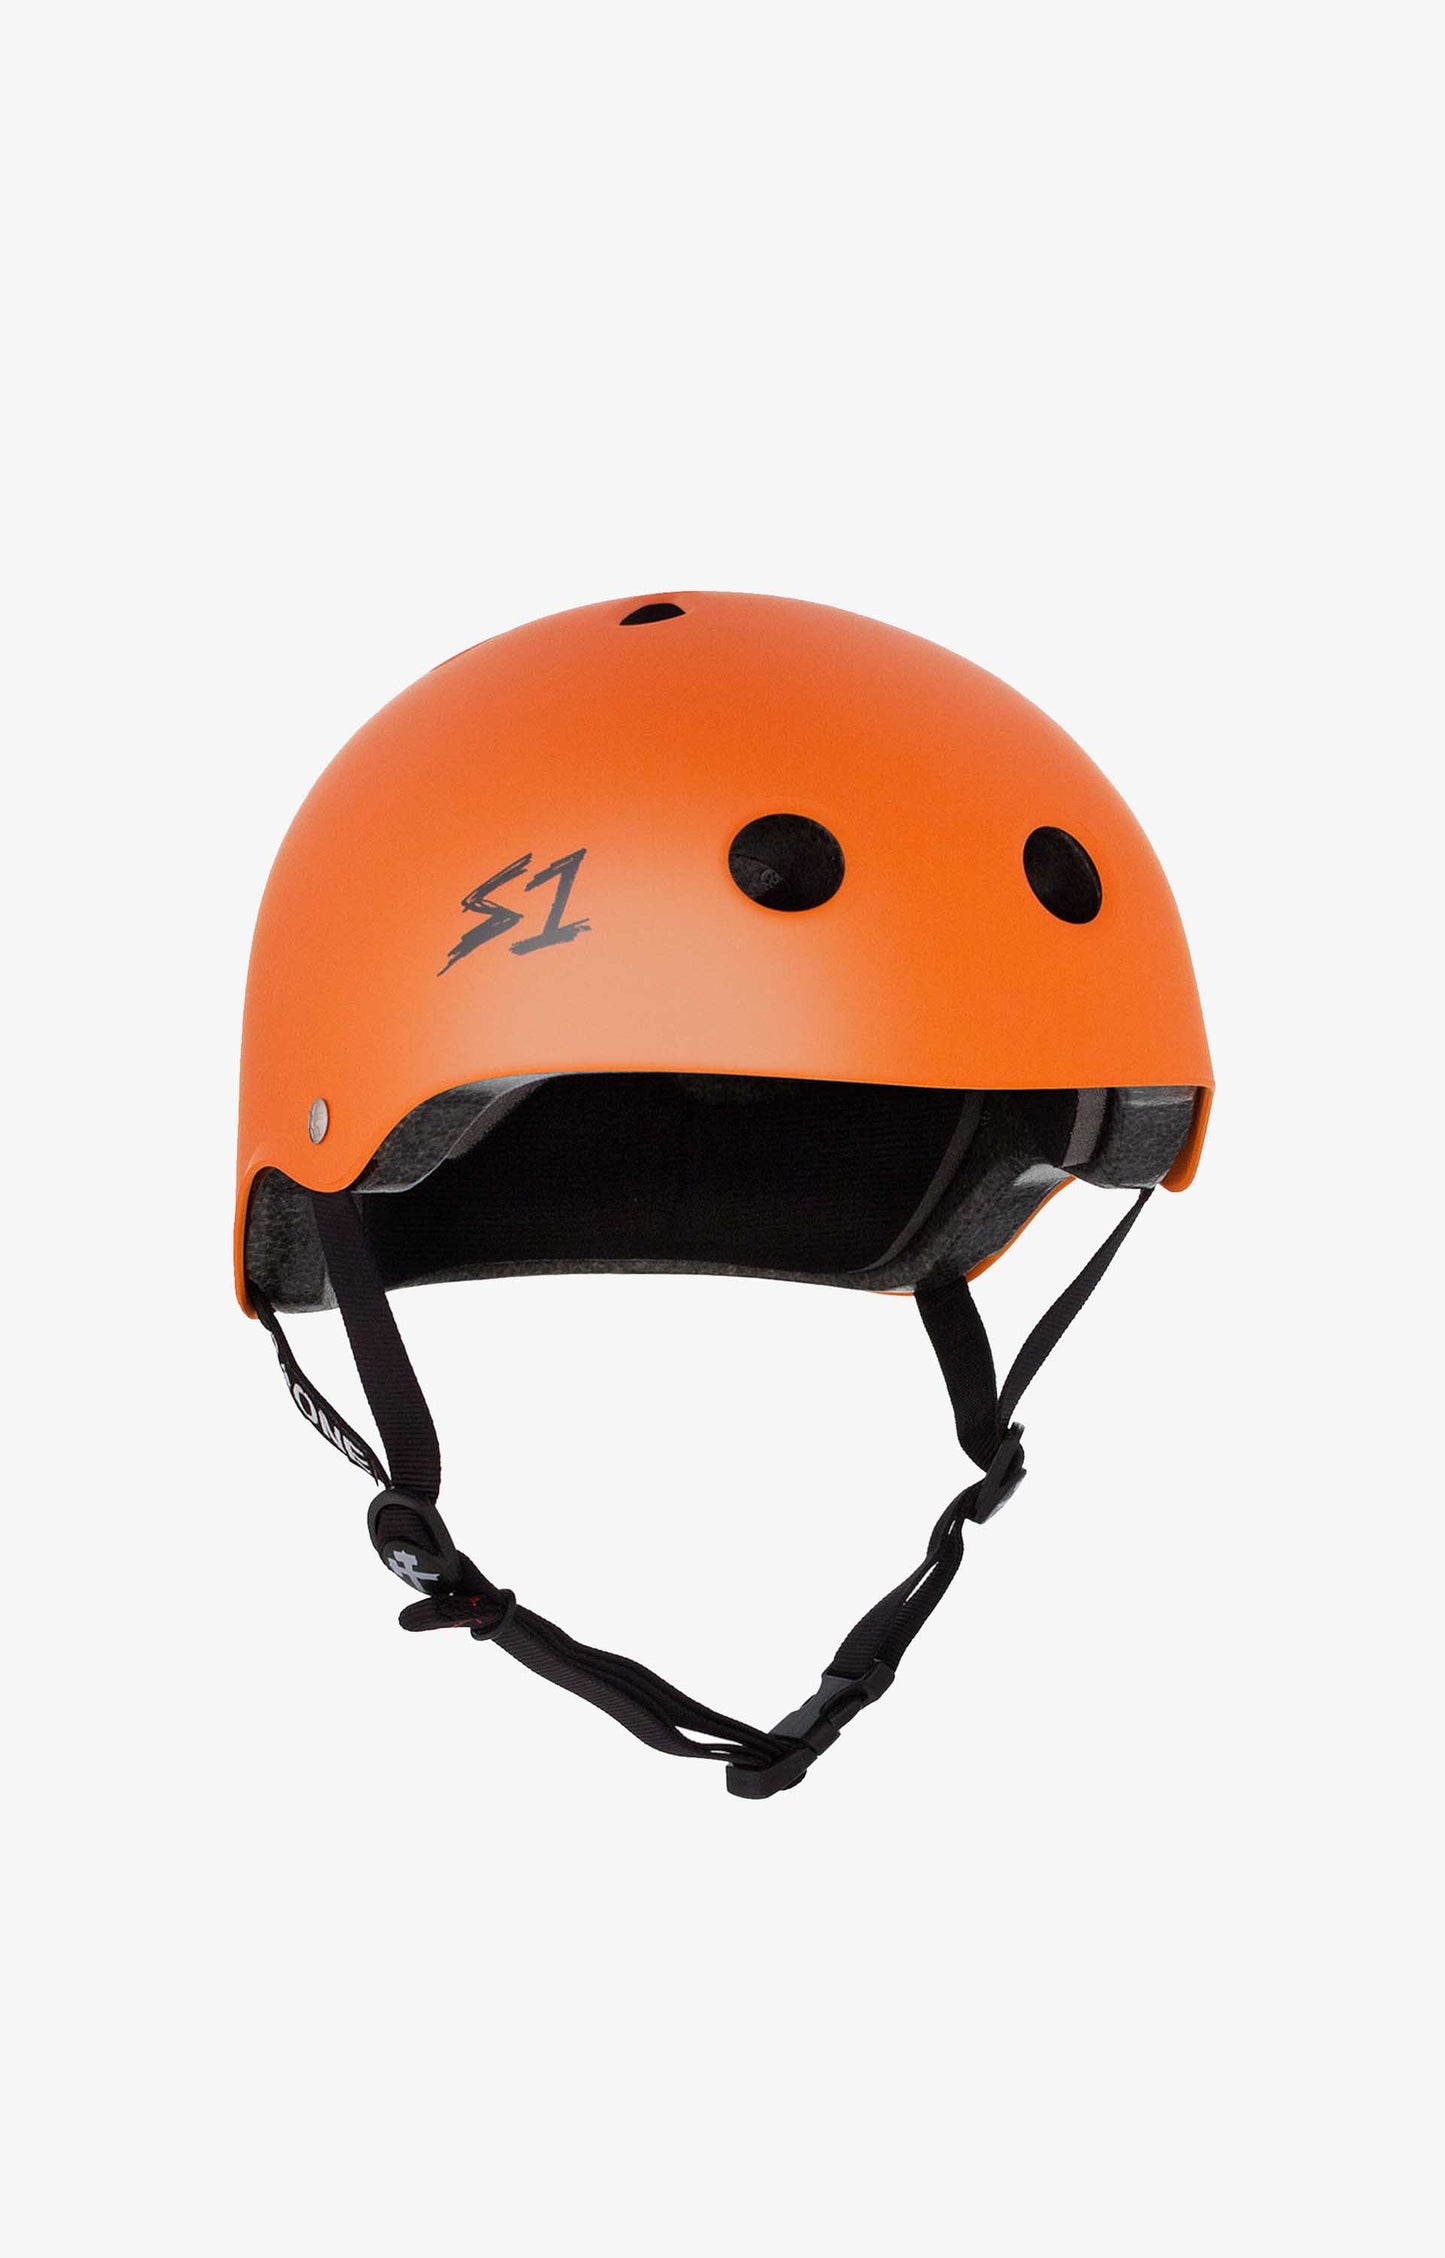 S-One Lifer Series Helmet, Orange Matte